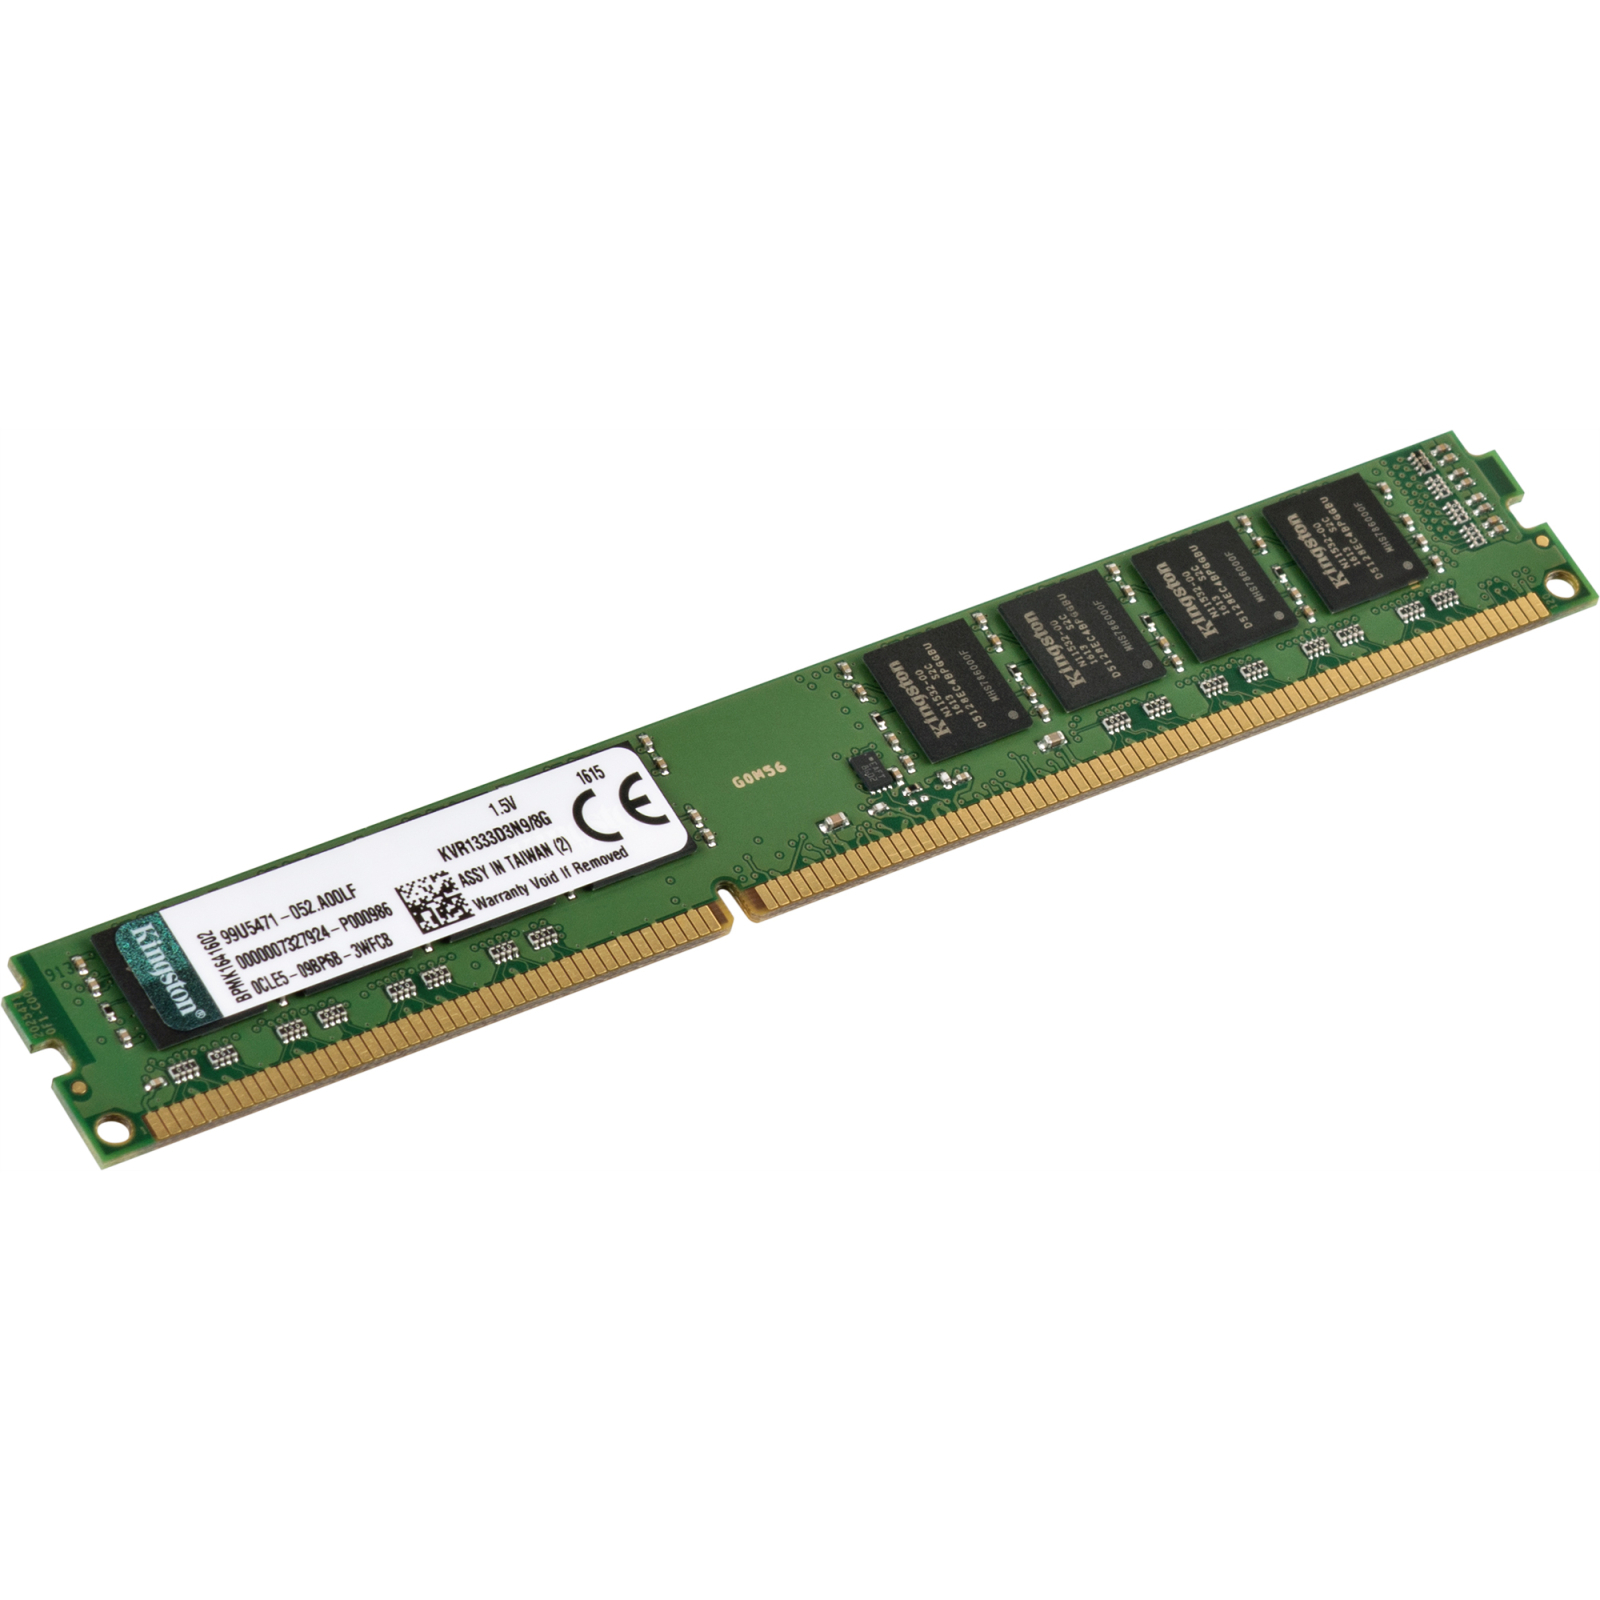 Модуль памяти для компьютера DDR3 8GB 1333 MHz Kingston (KVR1333D3N9/8G) изображение 2